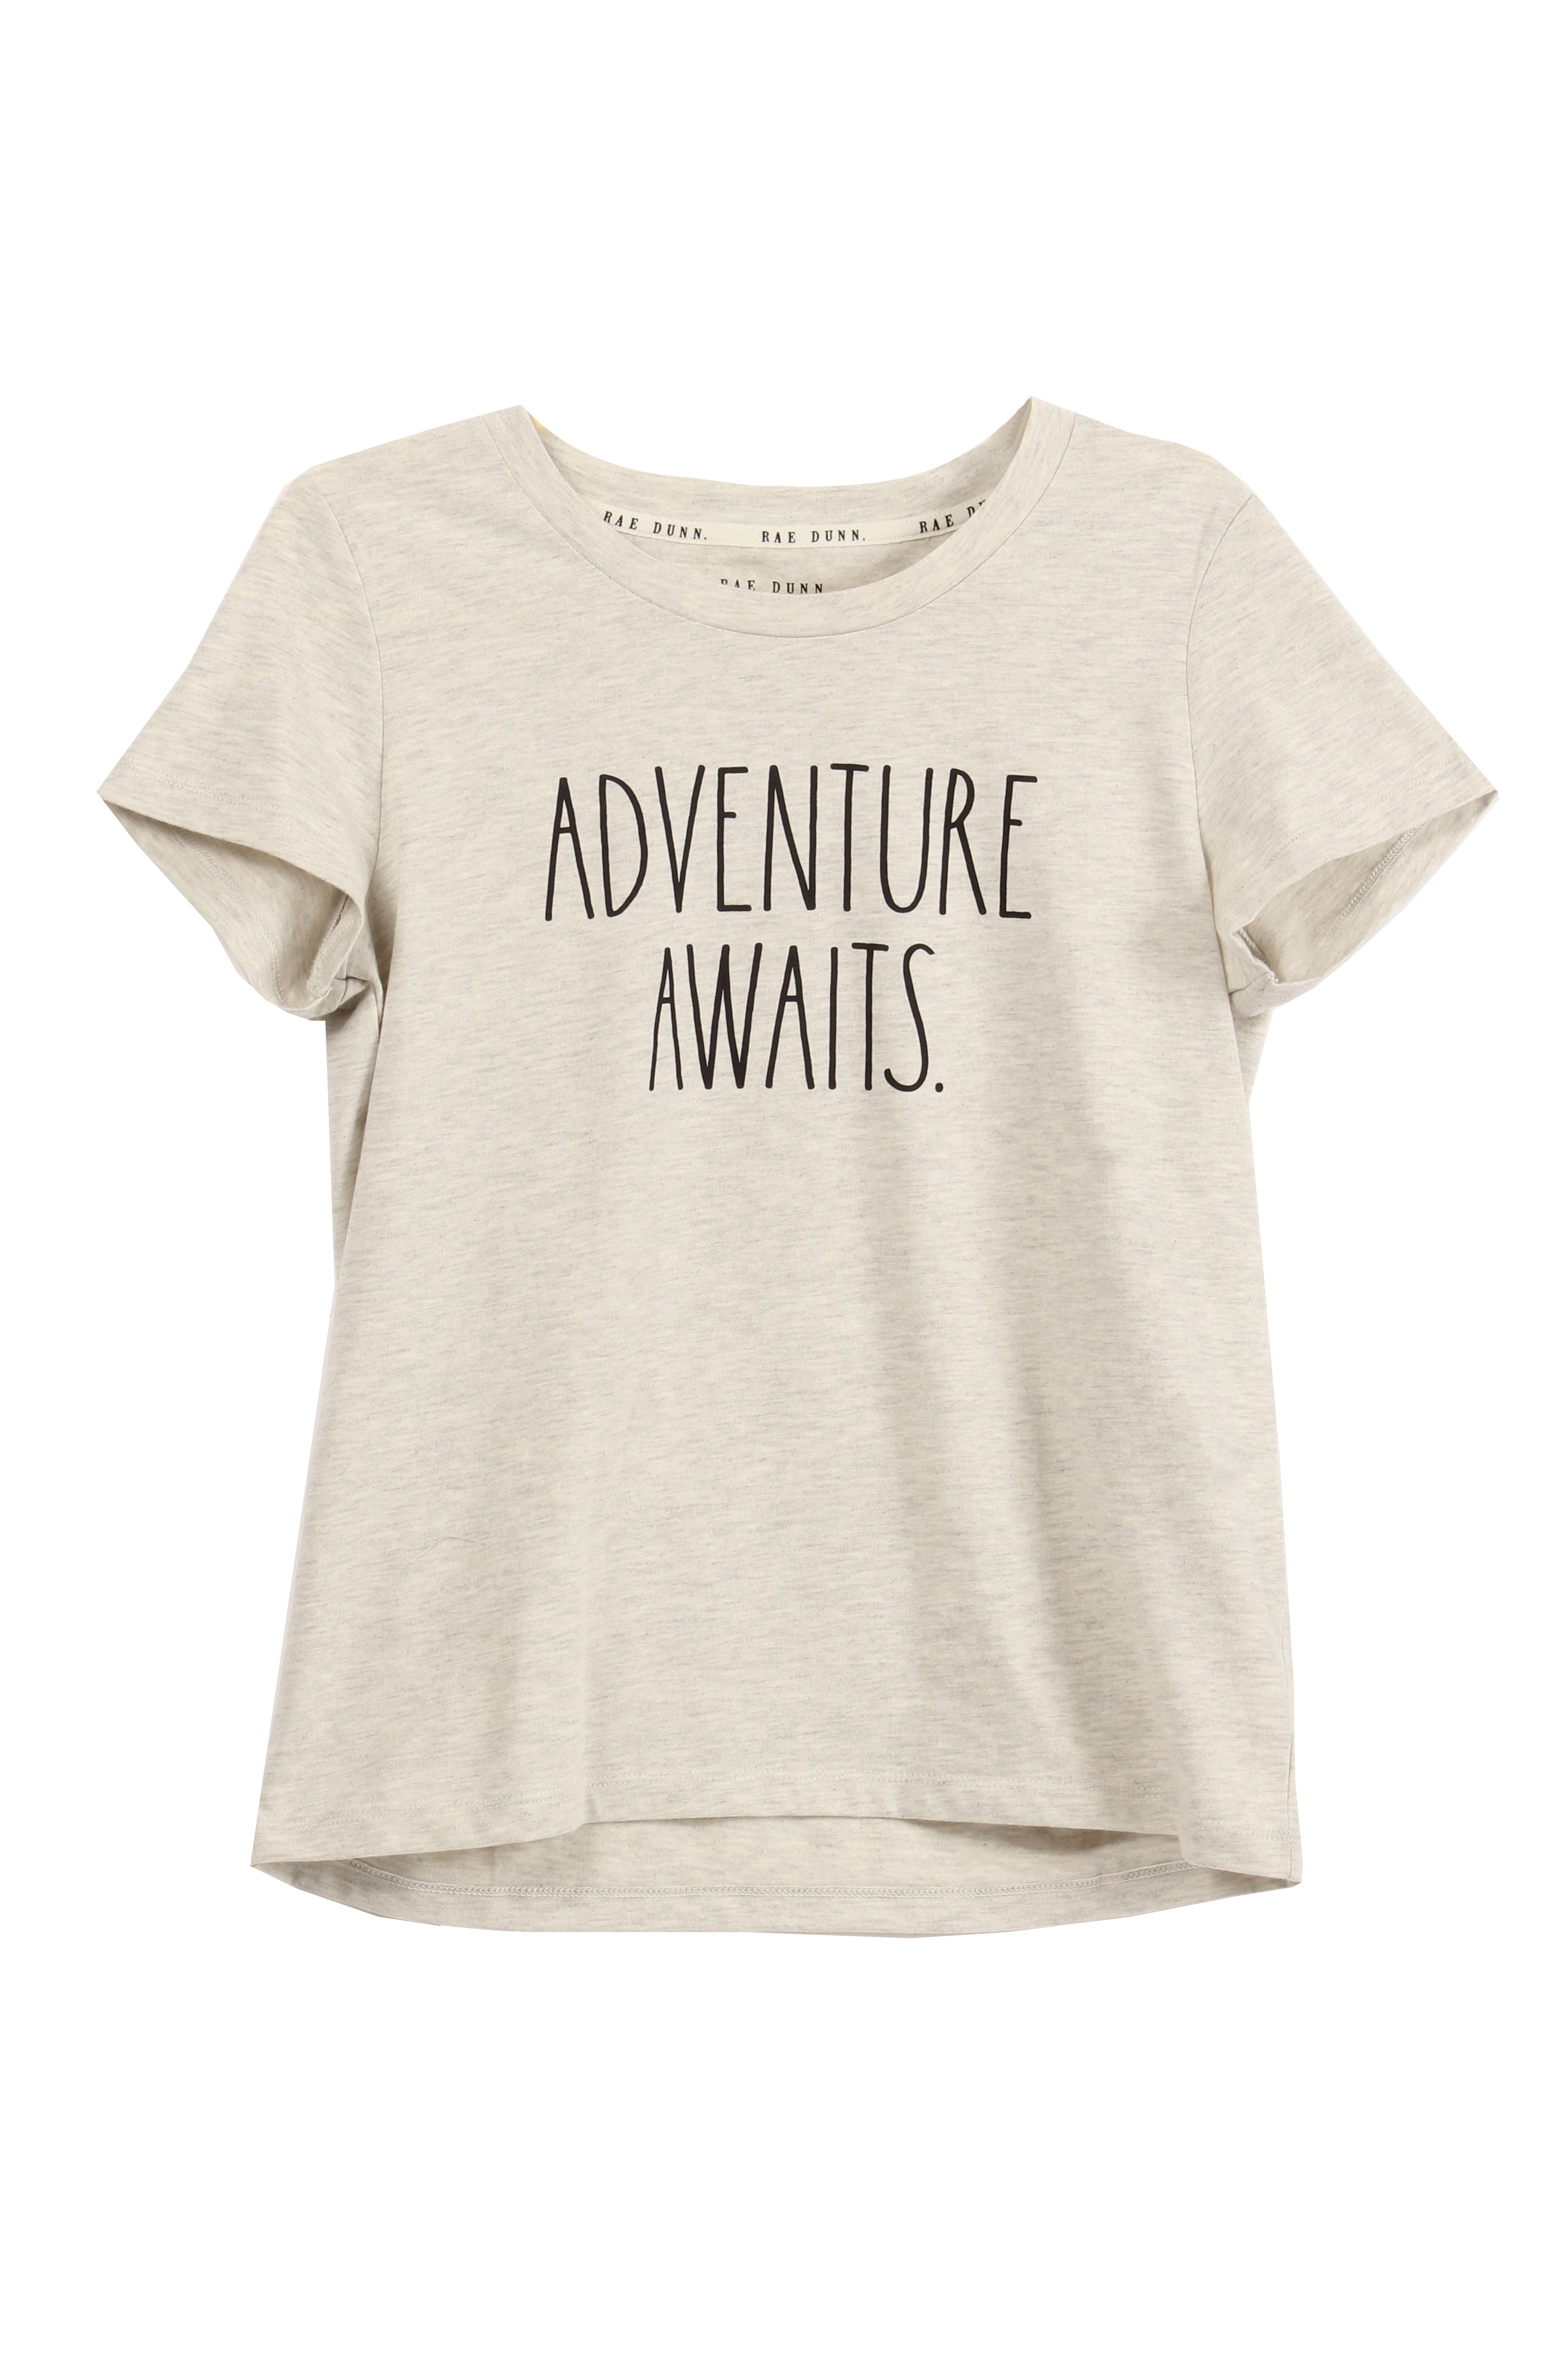 Rae Dunn T-Shirt Adventure Awaits Apparel